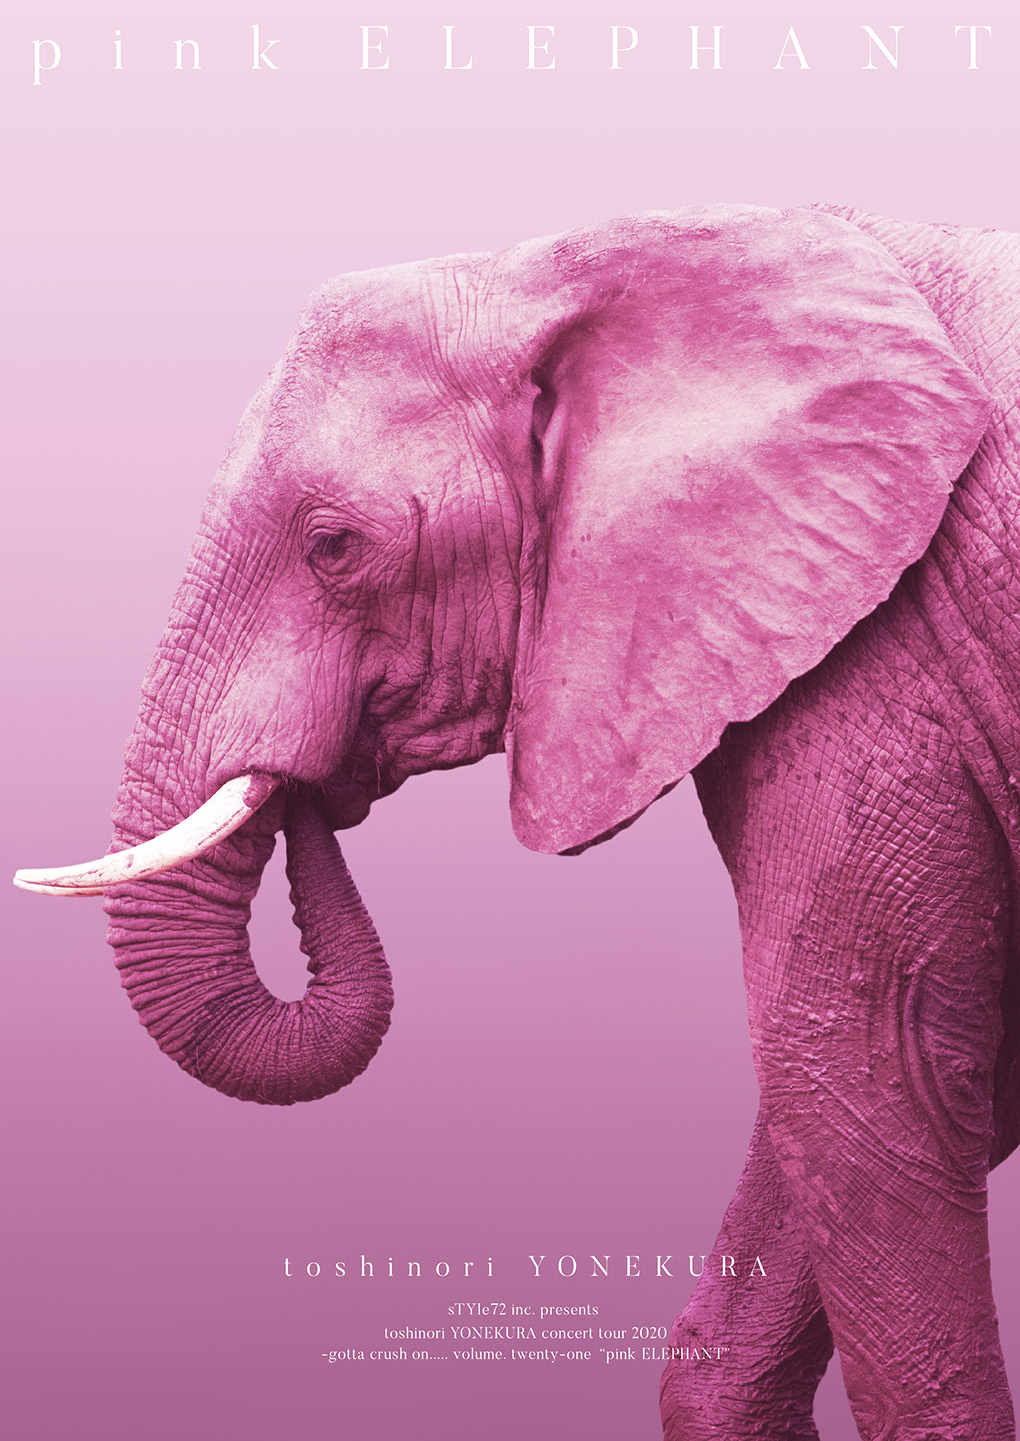 sTYle72 inc. presents toshinori YONEKURA concert tour 2020 -gotta crush on….. volume. twenty-one “pink ELEPHANT”